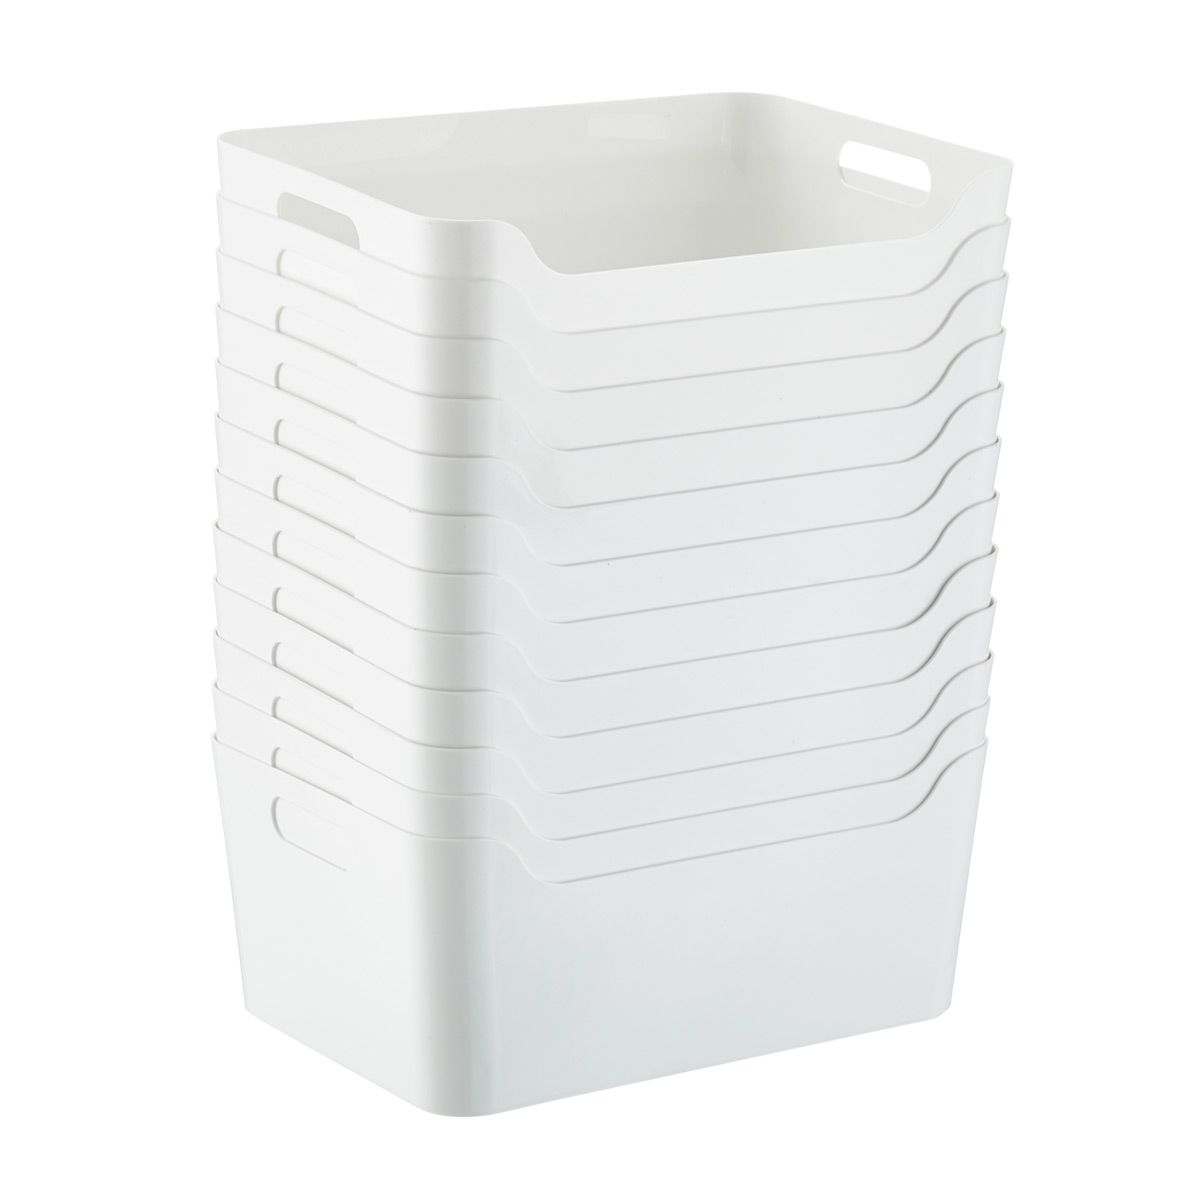 Case of 12 Medium Plastic Bins w/ Handles White | The Container Store